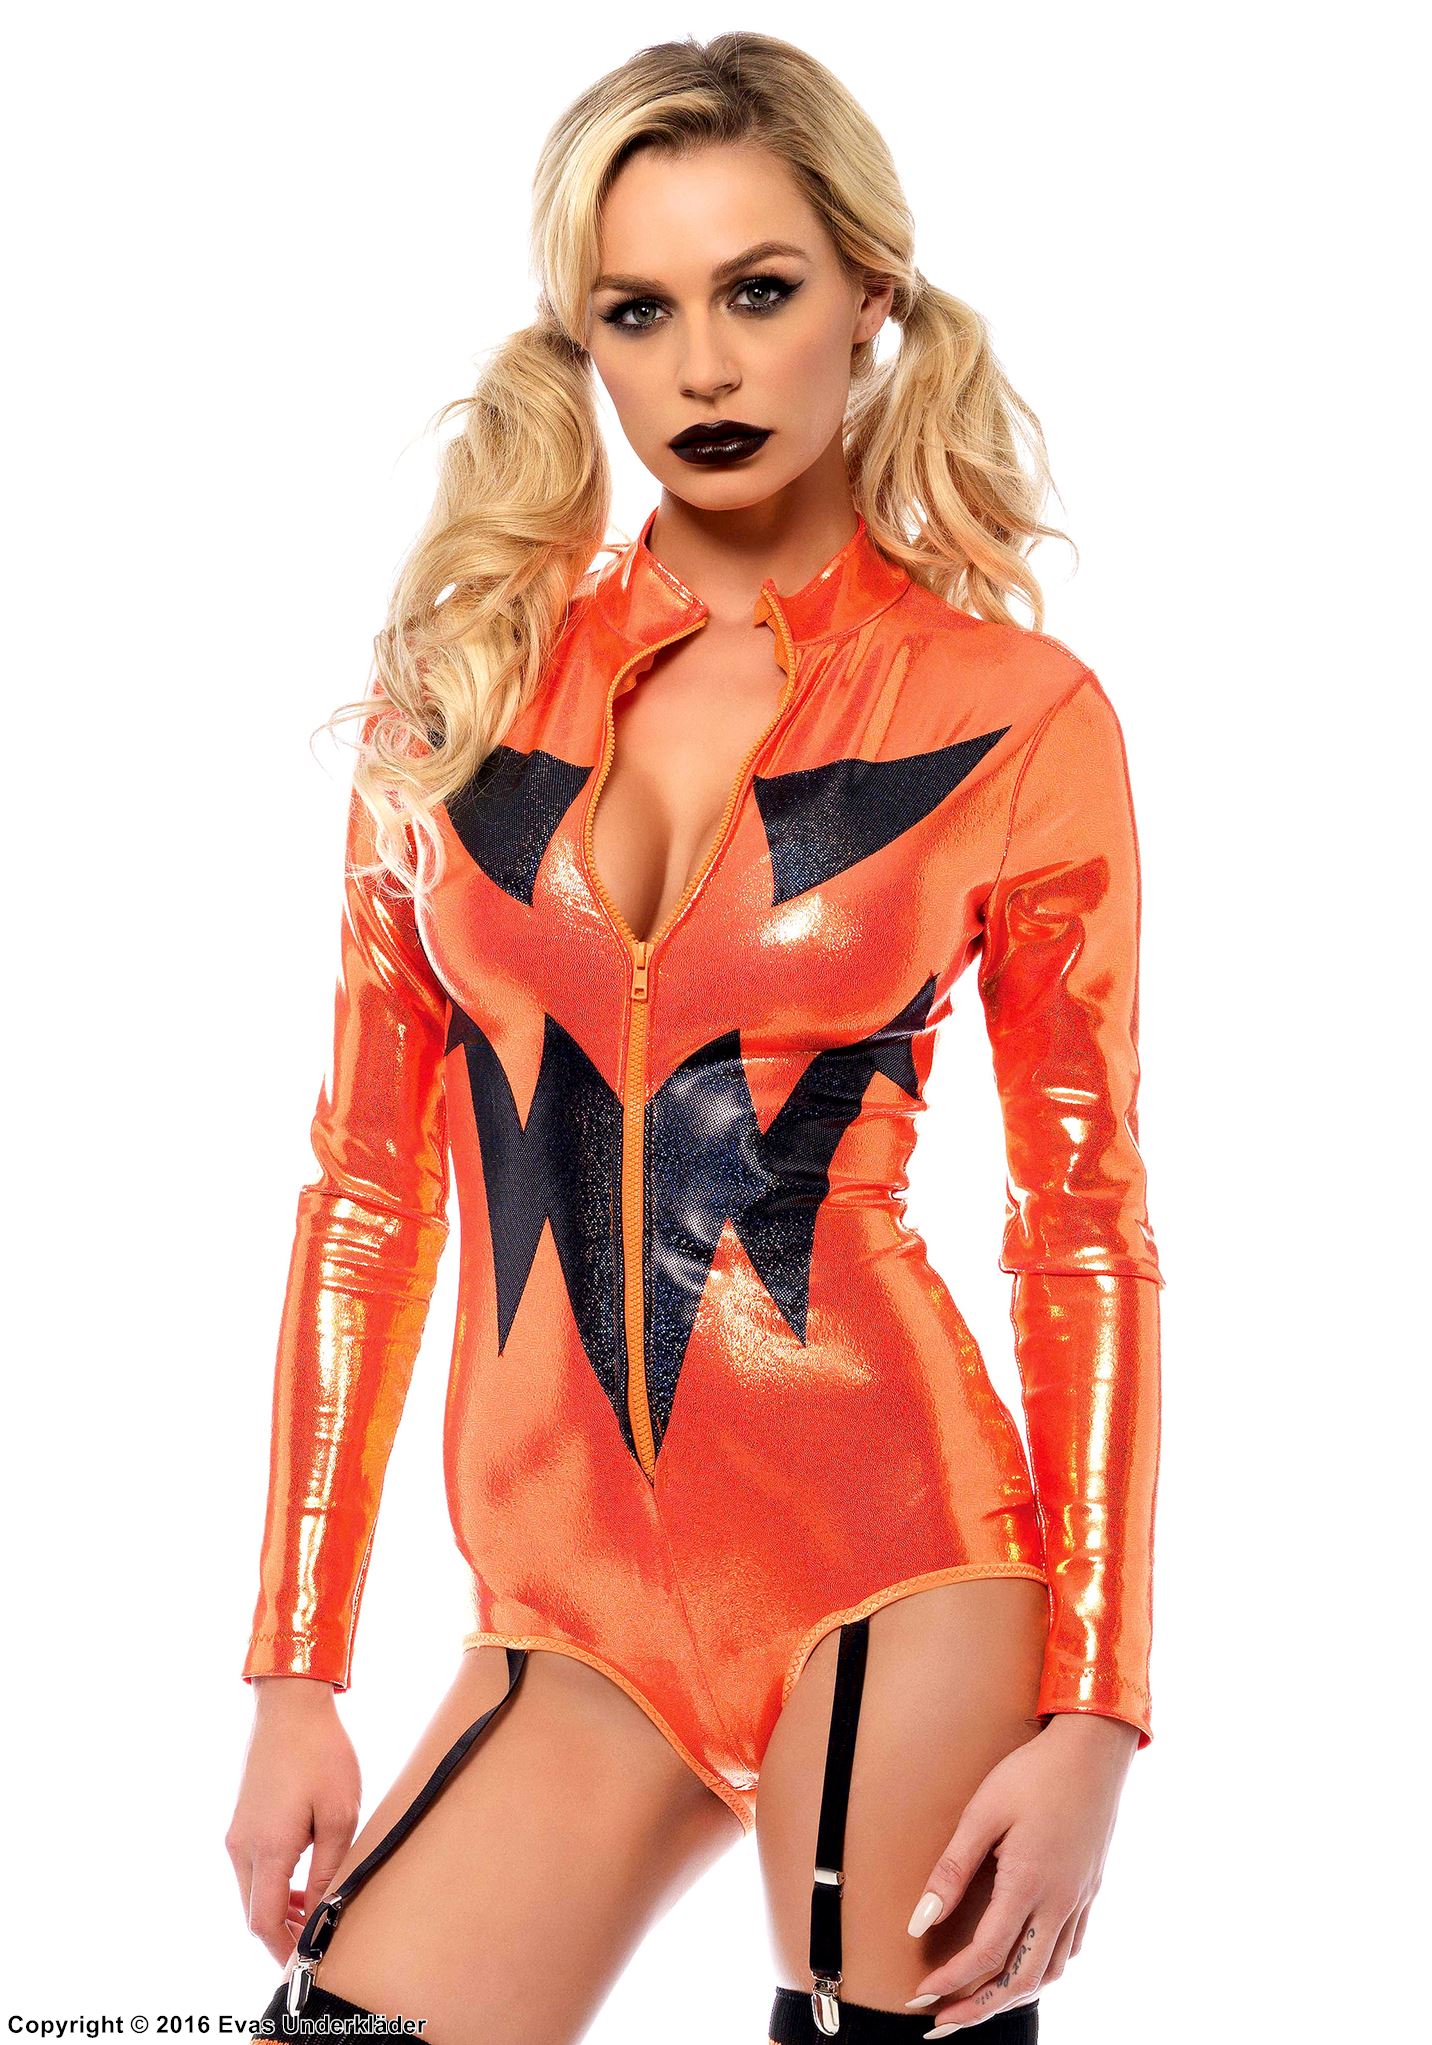 Jack-o'-lantern Halloween pumpkin, body costume, iridescent fabric, front zipper